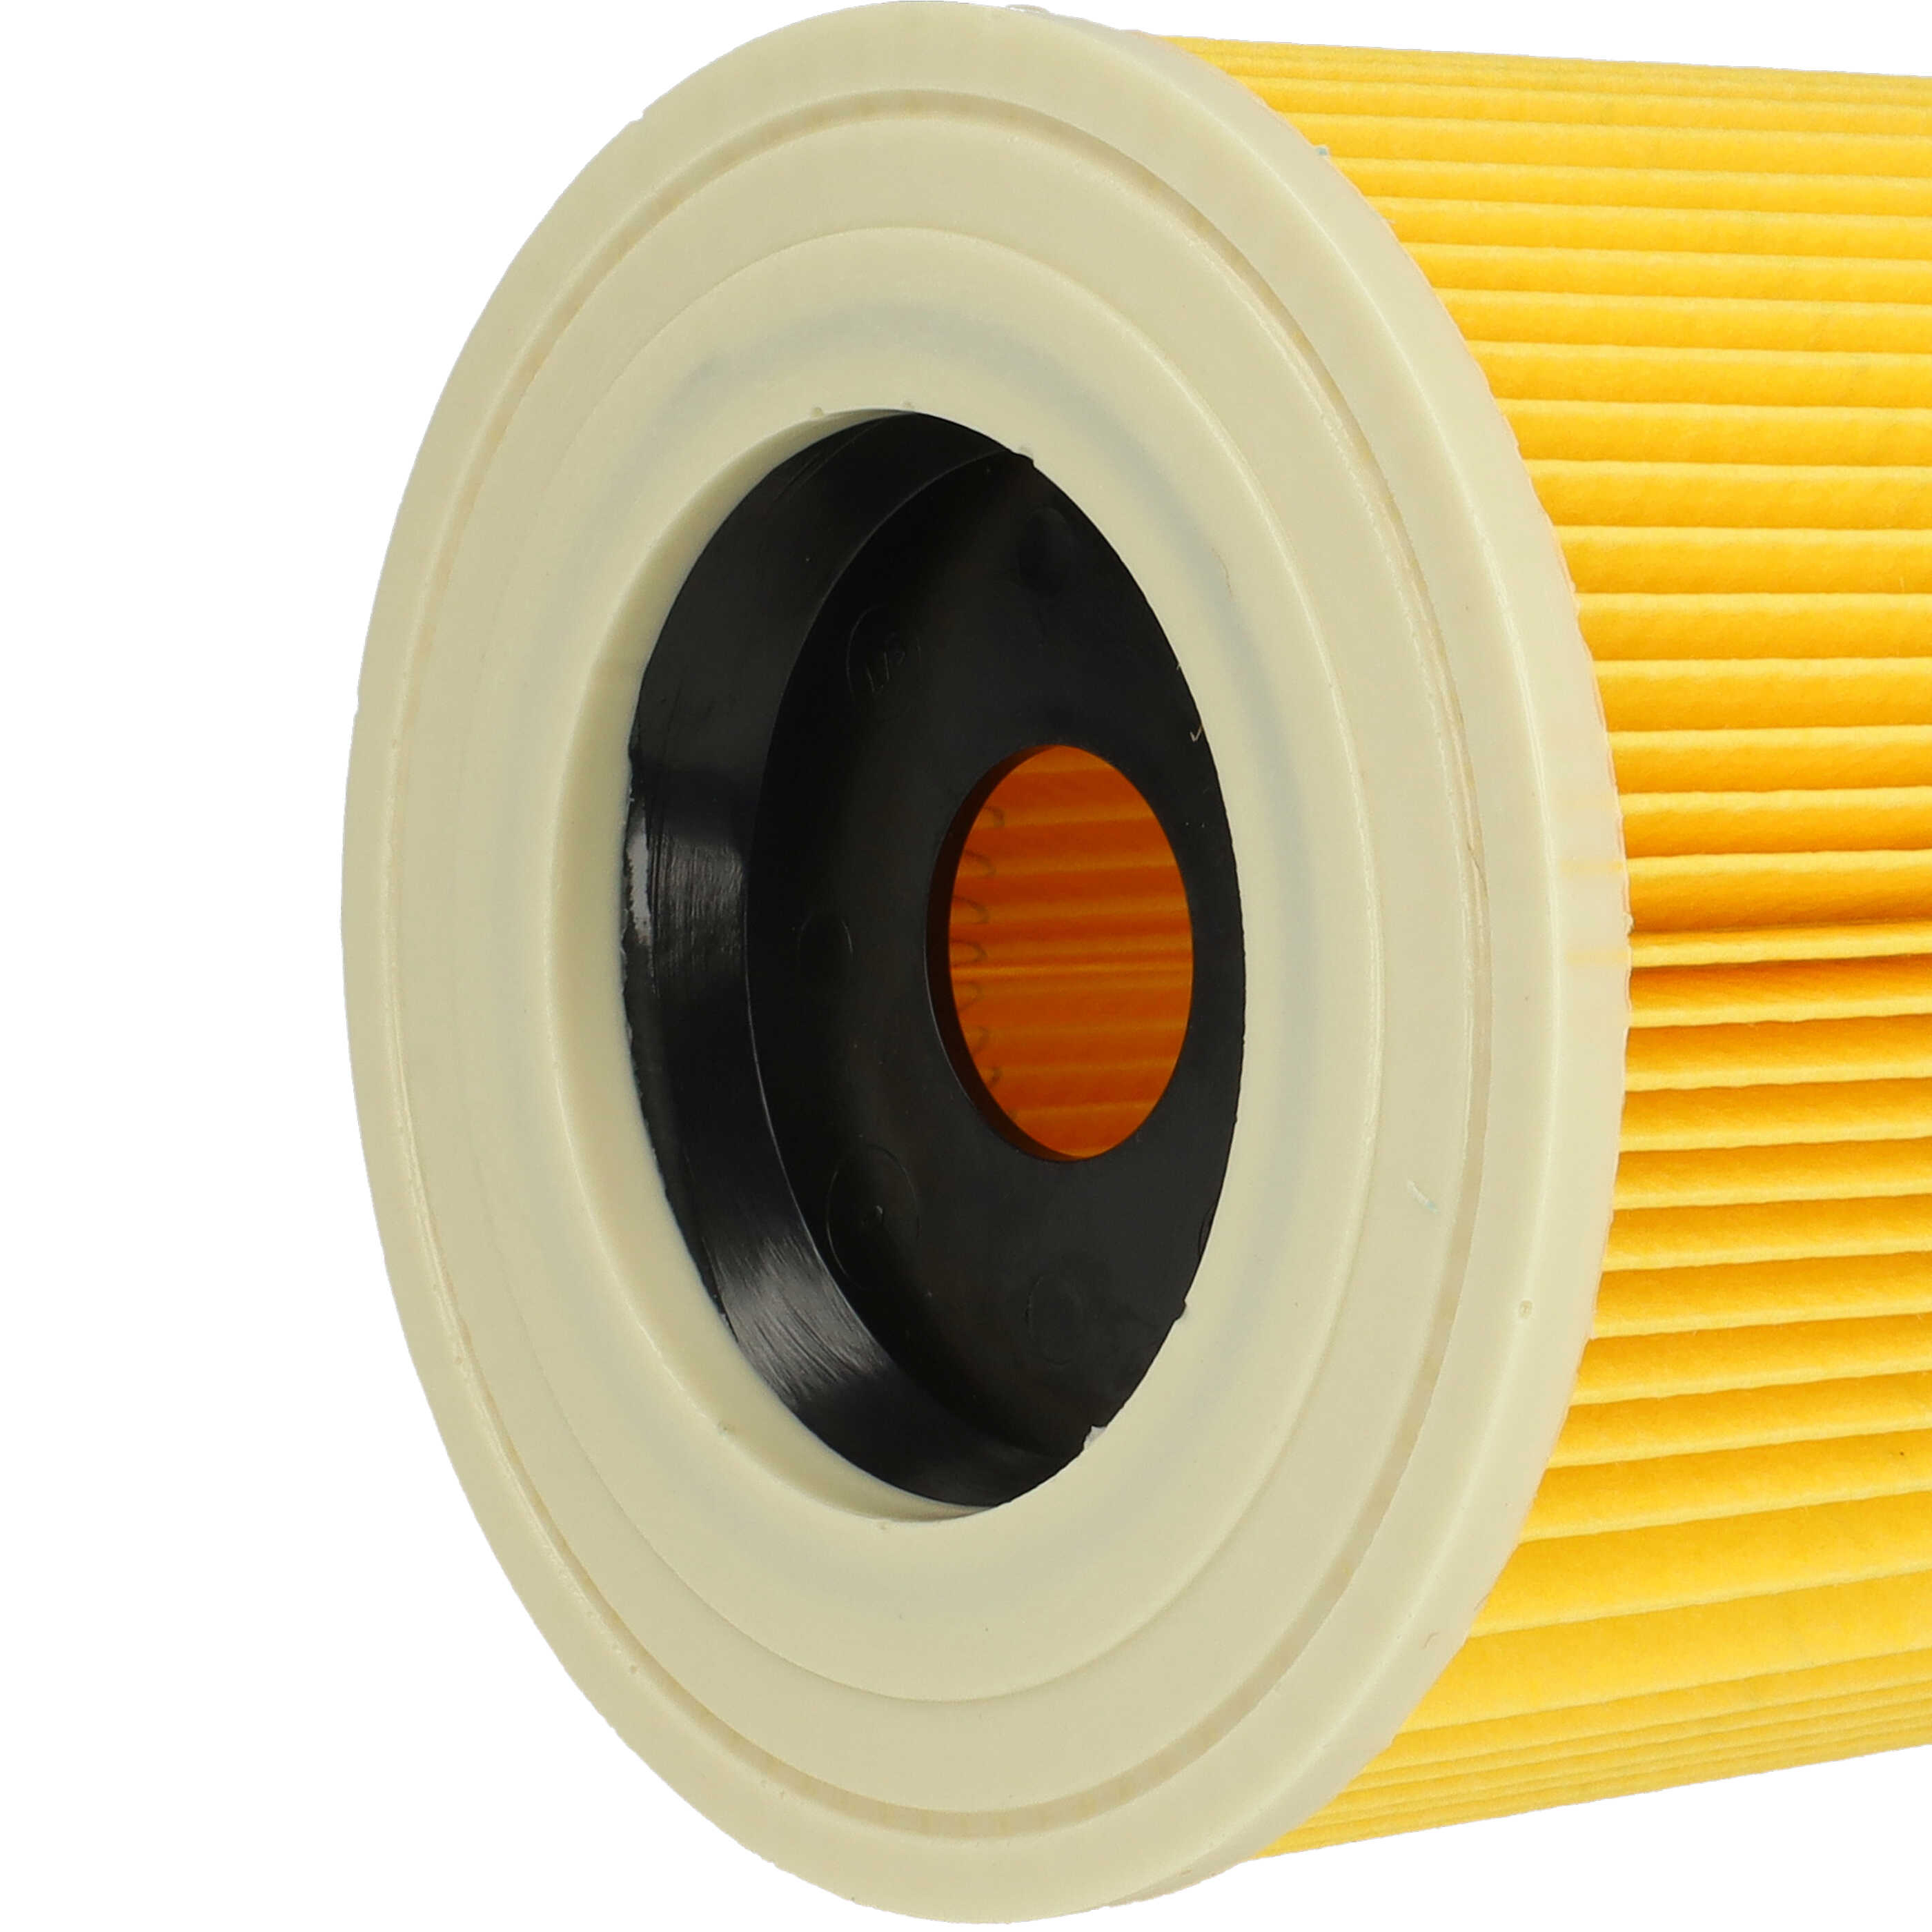 2x Filtro reemplaza Kärcher 6.414-547.0, 2.863-303.0 para aspiradora - filtro de cartucho, amarillo